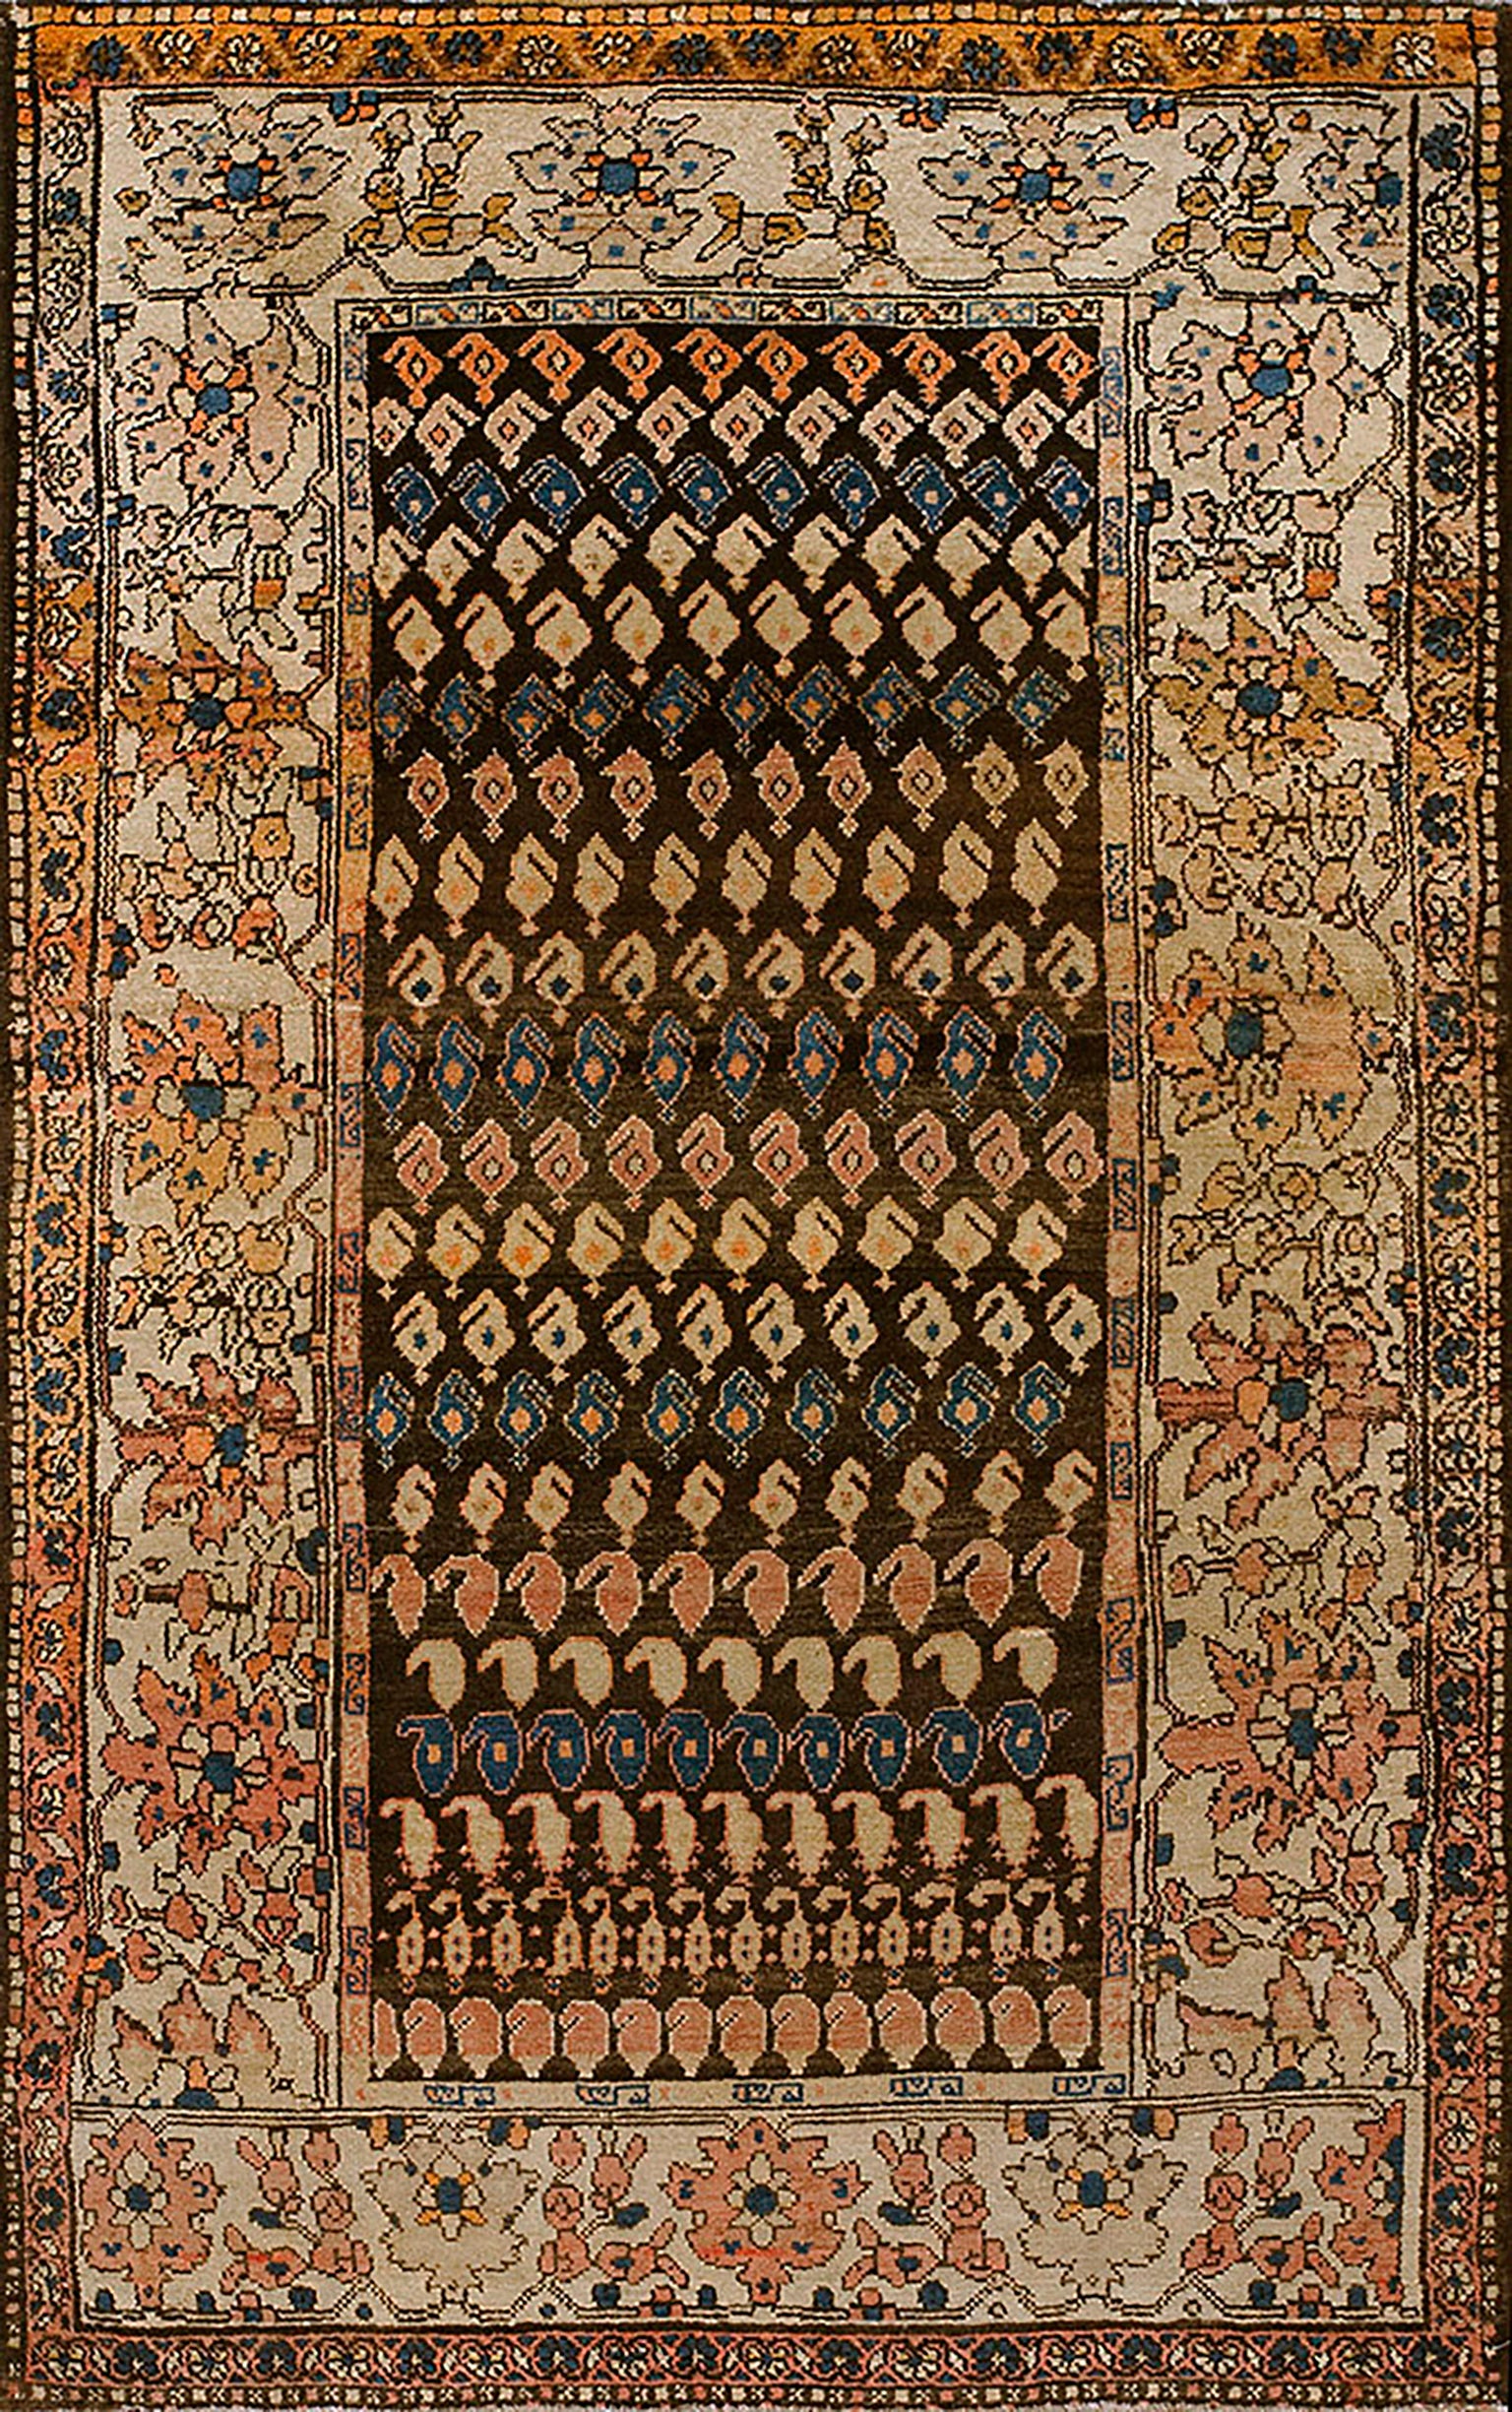 Early 20th Century Persian Malayer Paisley Carpet ( 4' x 6'5" - 122 x 196 )